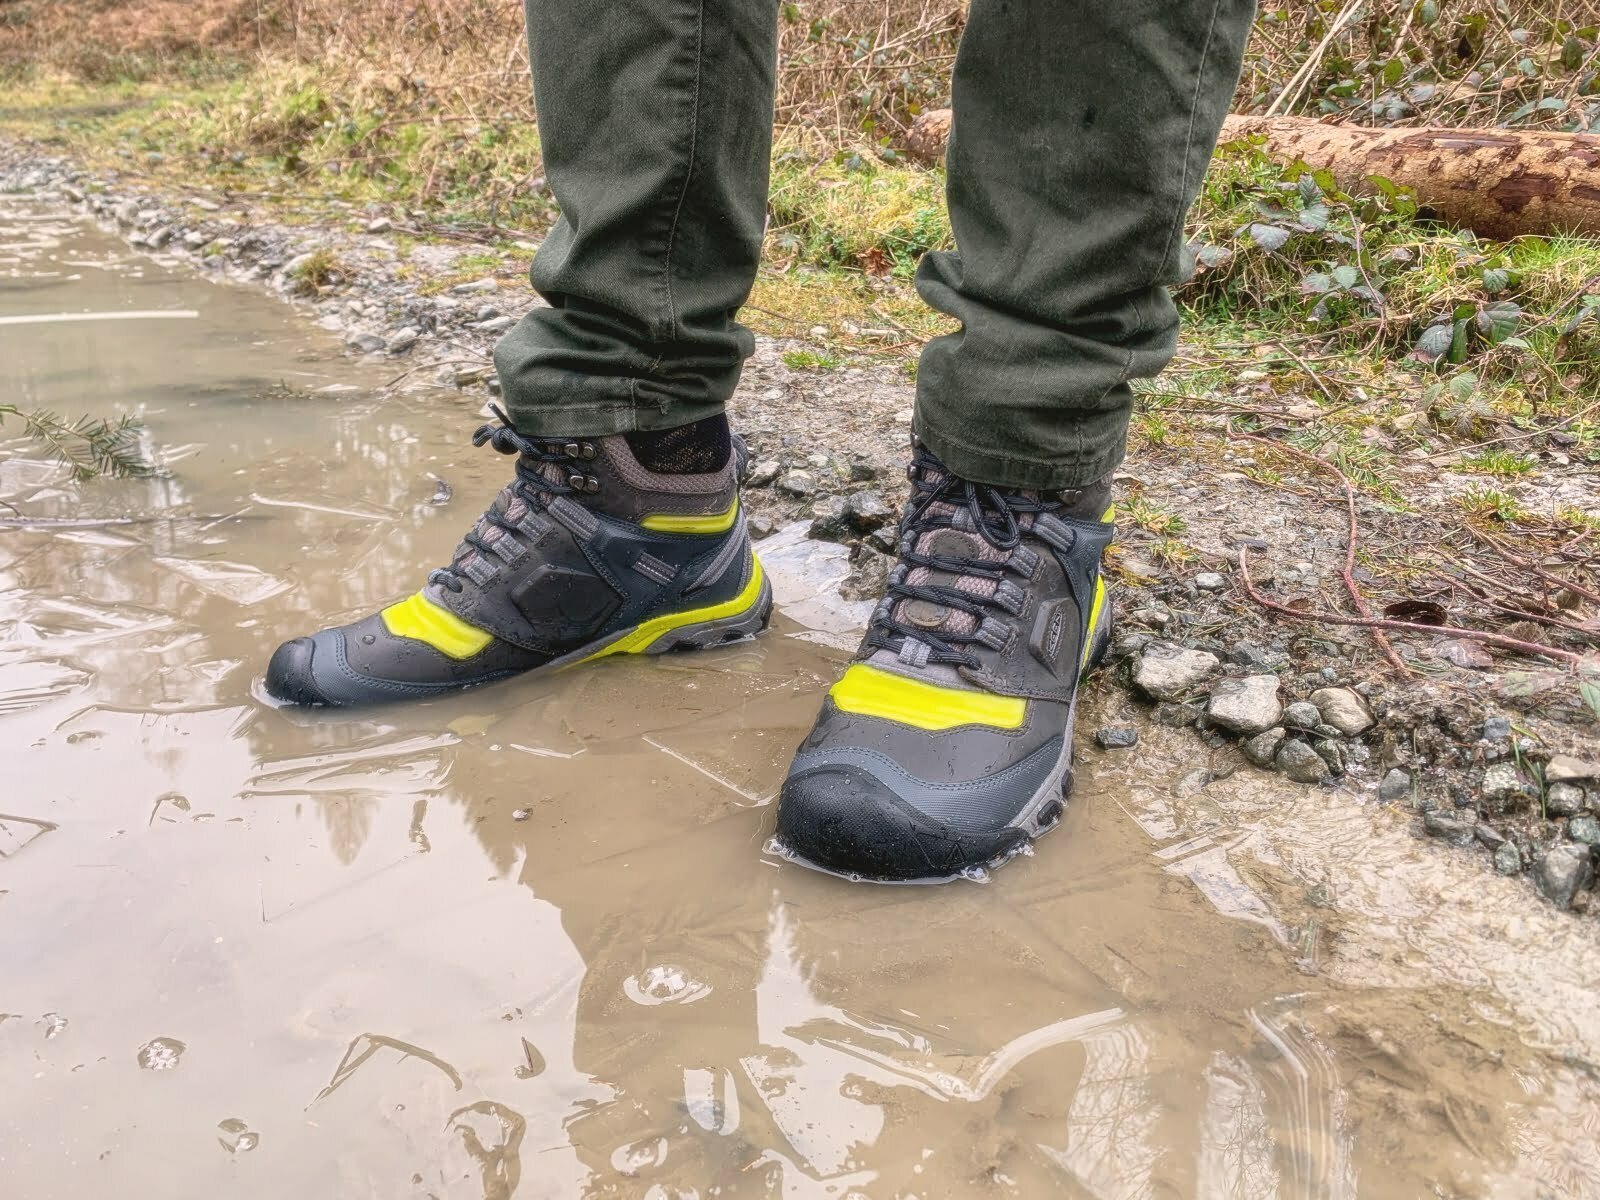 Keen Ridge Flex Waterproof Hiking Boots Review